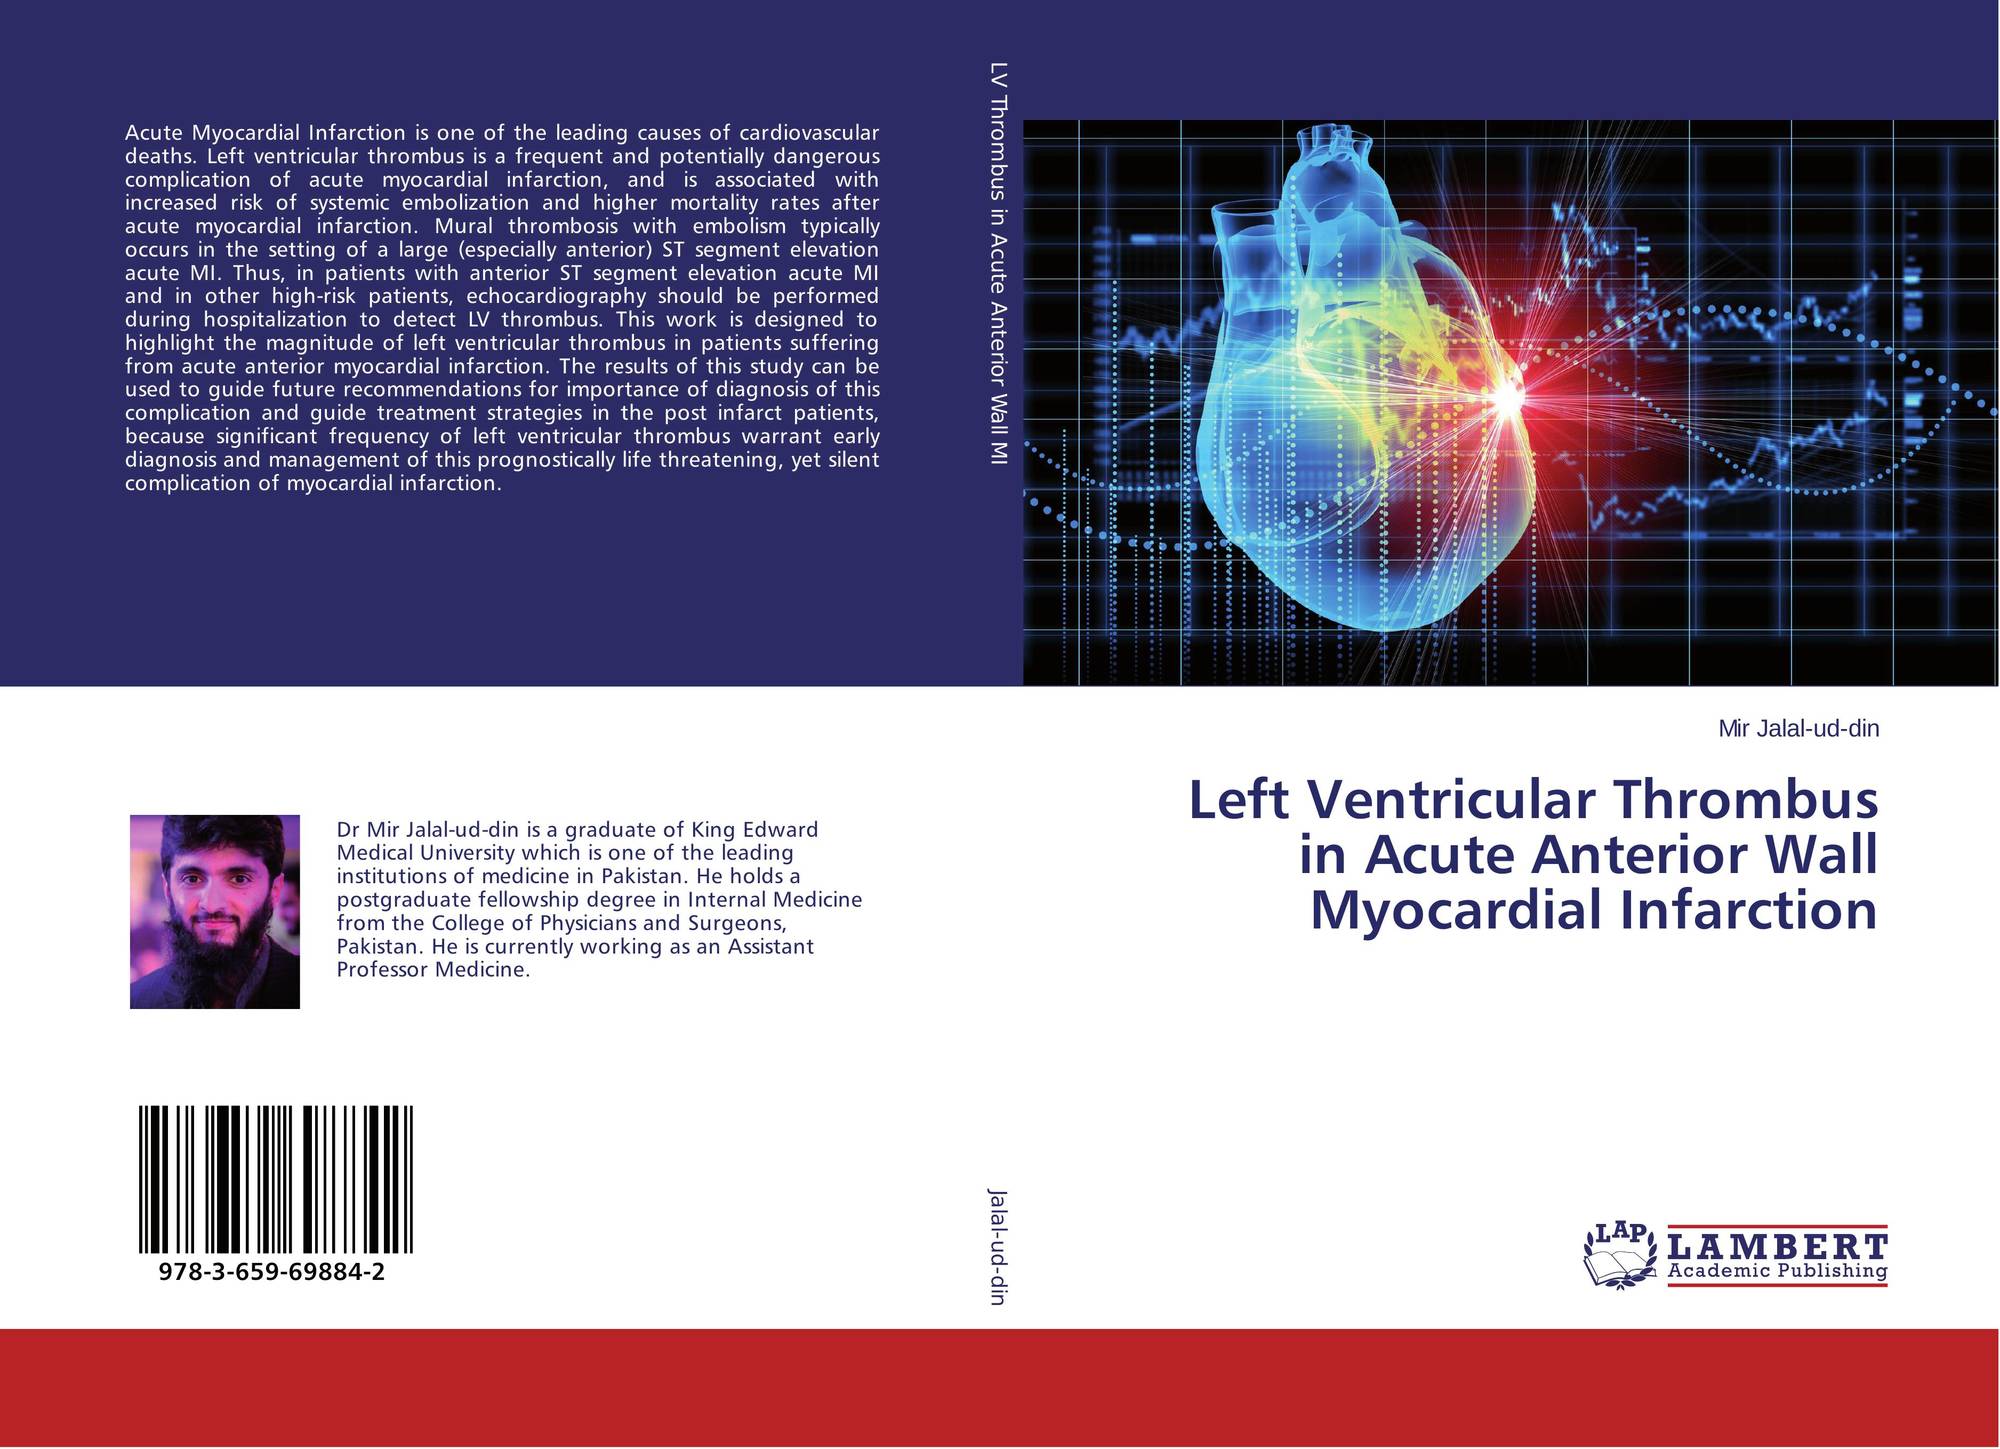 Left Ventricular Thrombus in Acute Anterior Wall Myocardial Infarction, 978-3-659-69884-2 ...